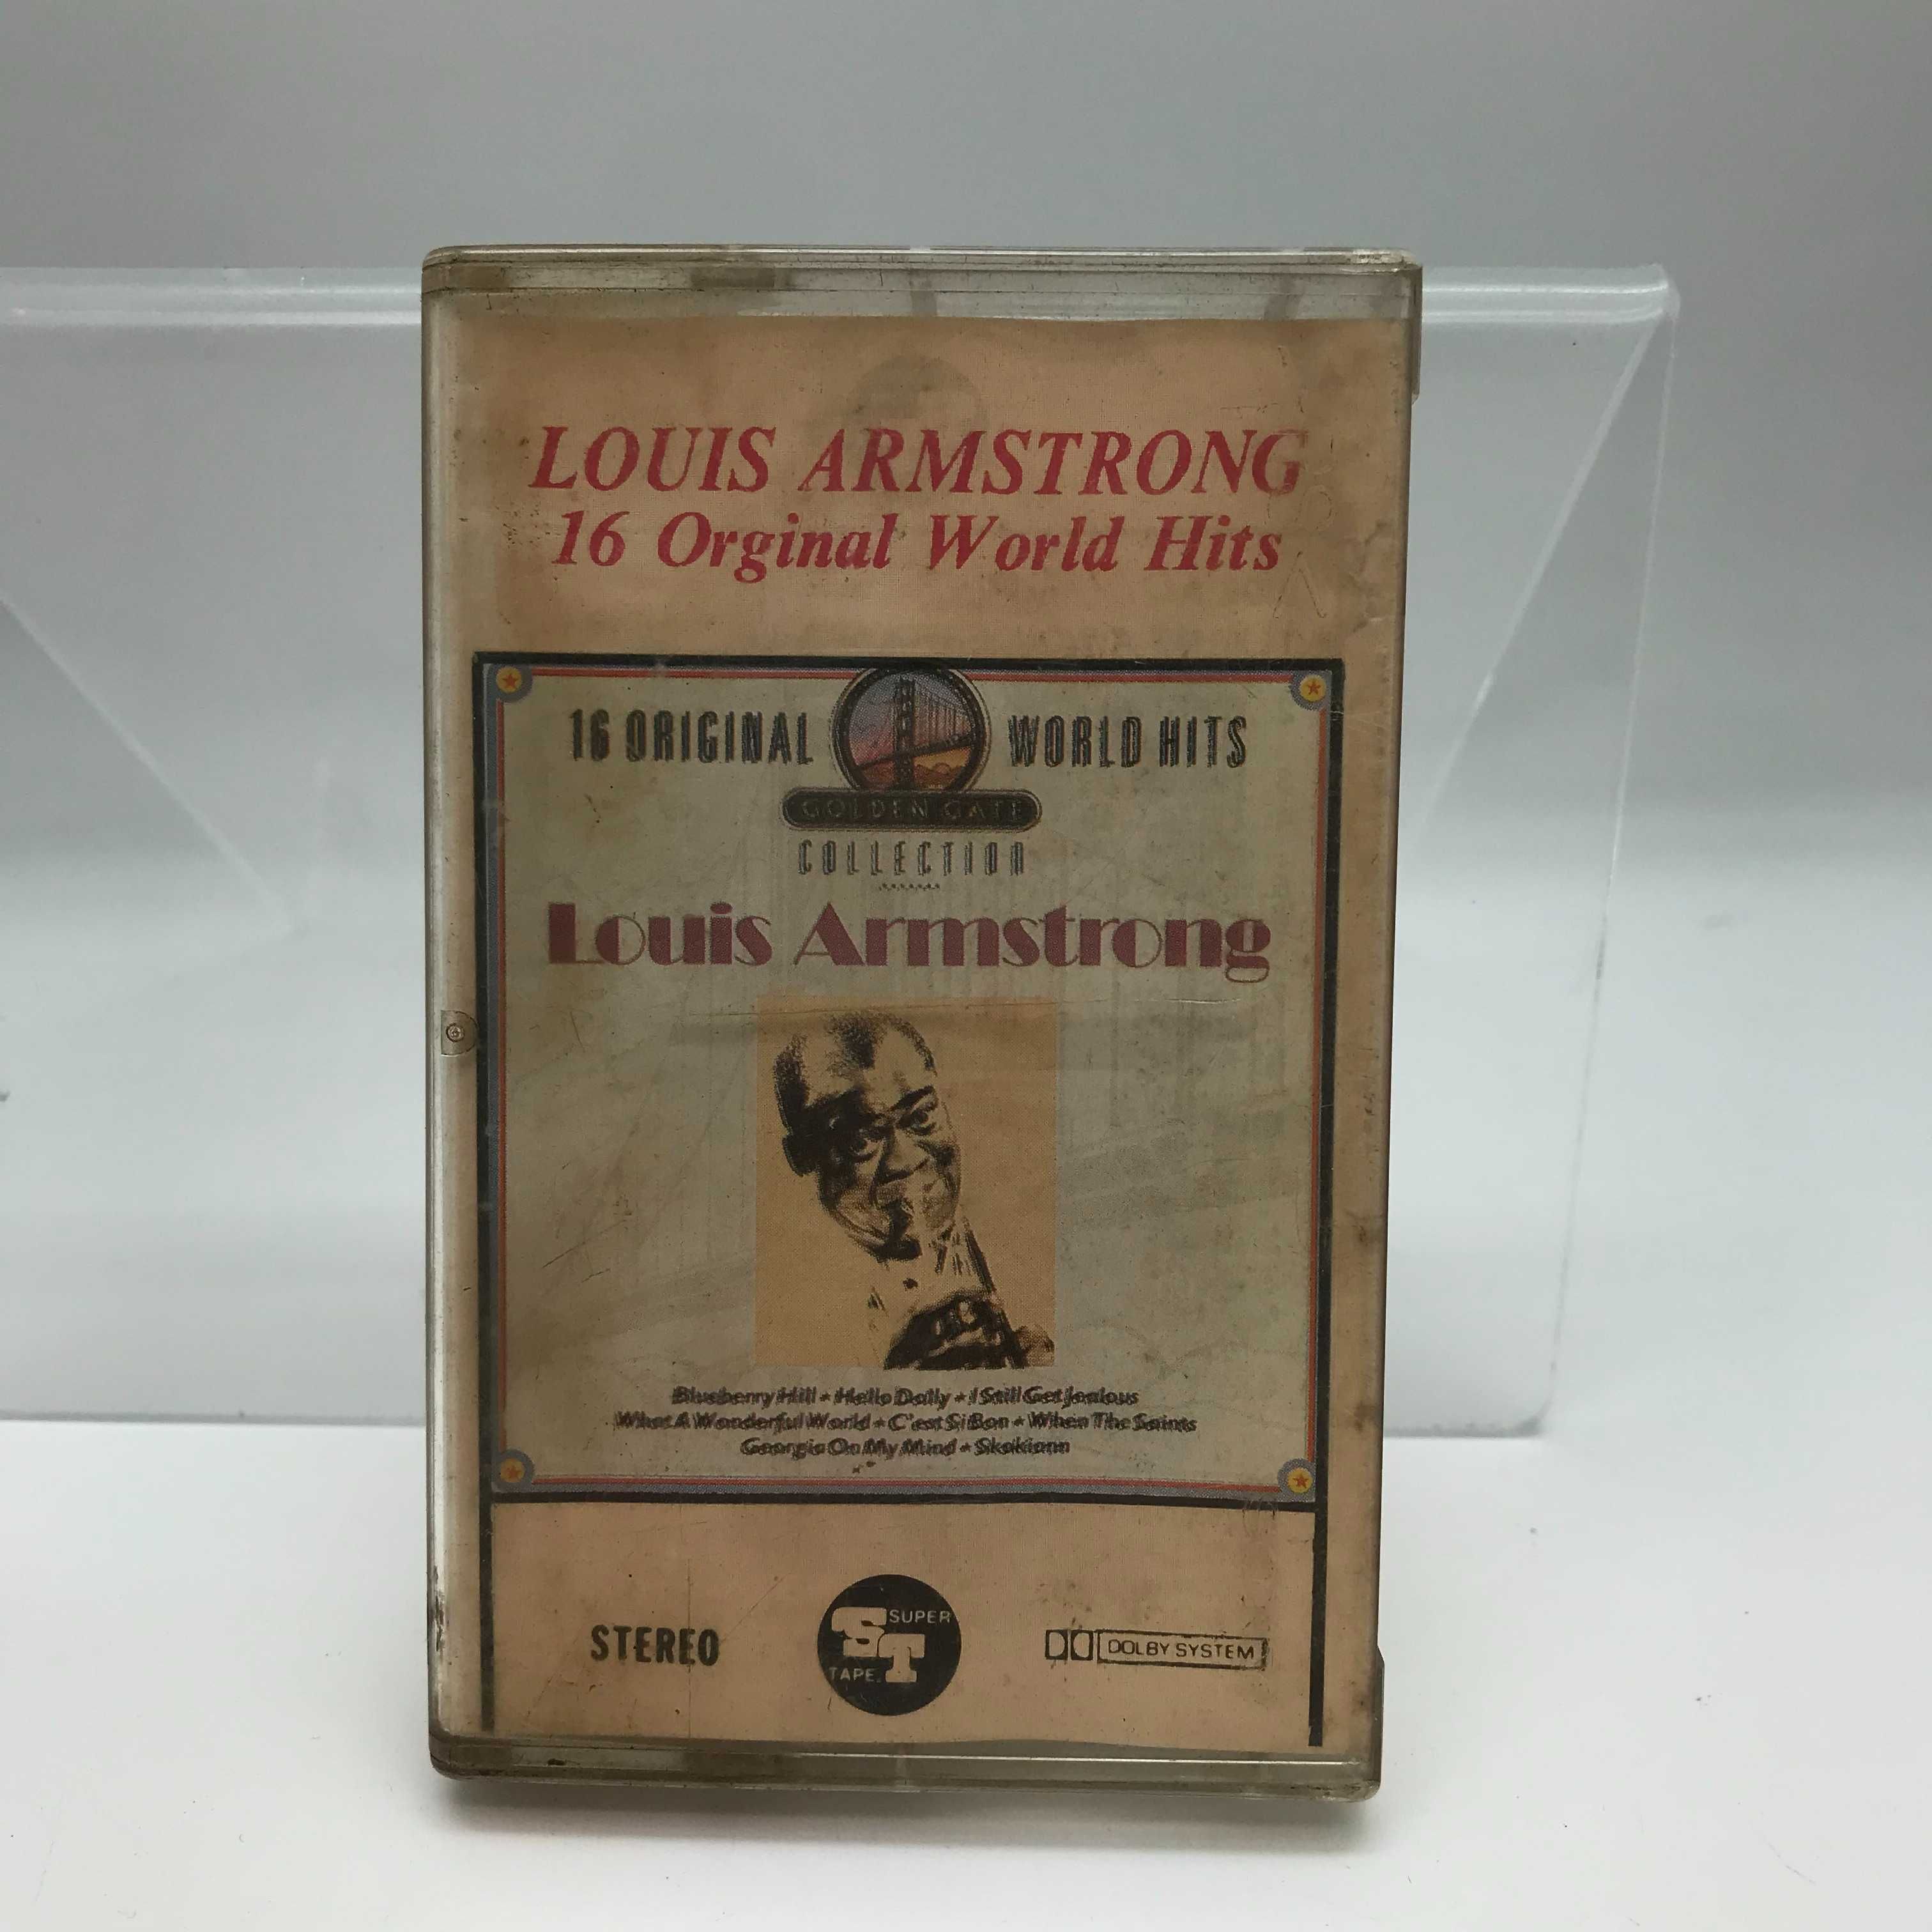 kaseta louis armstrong - 16 original world hits (1983)